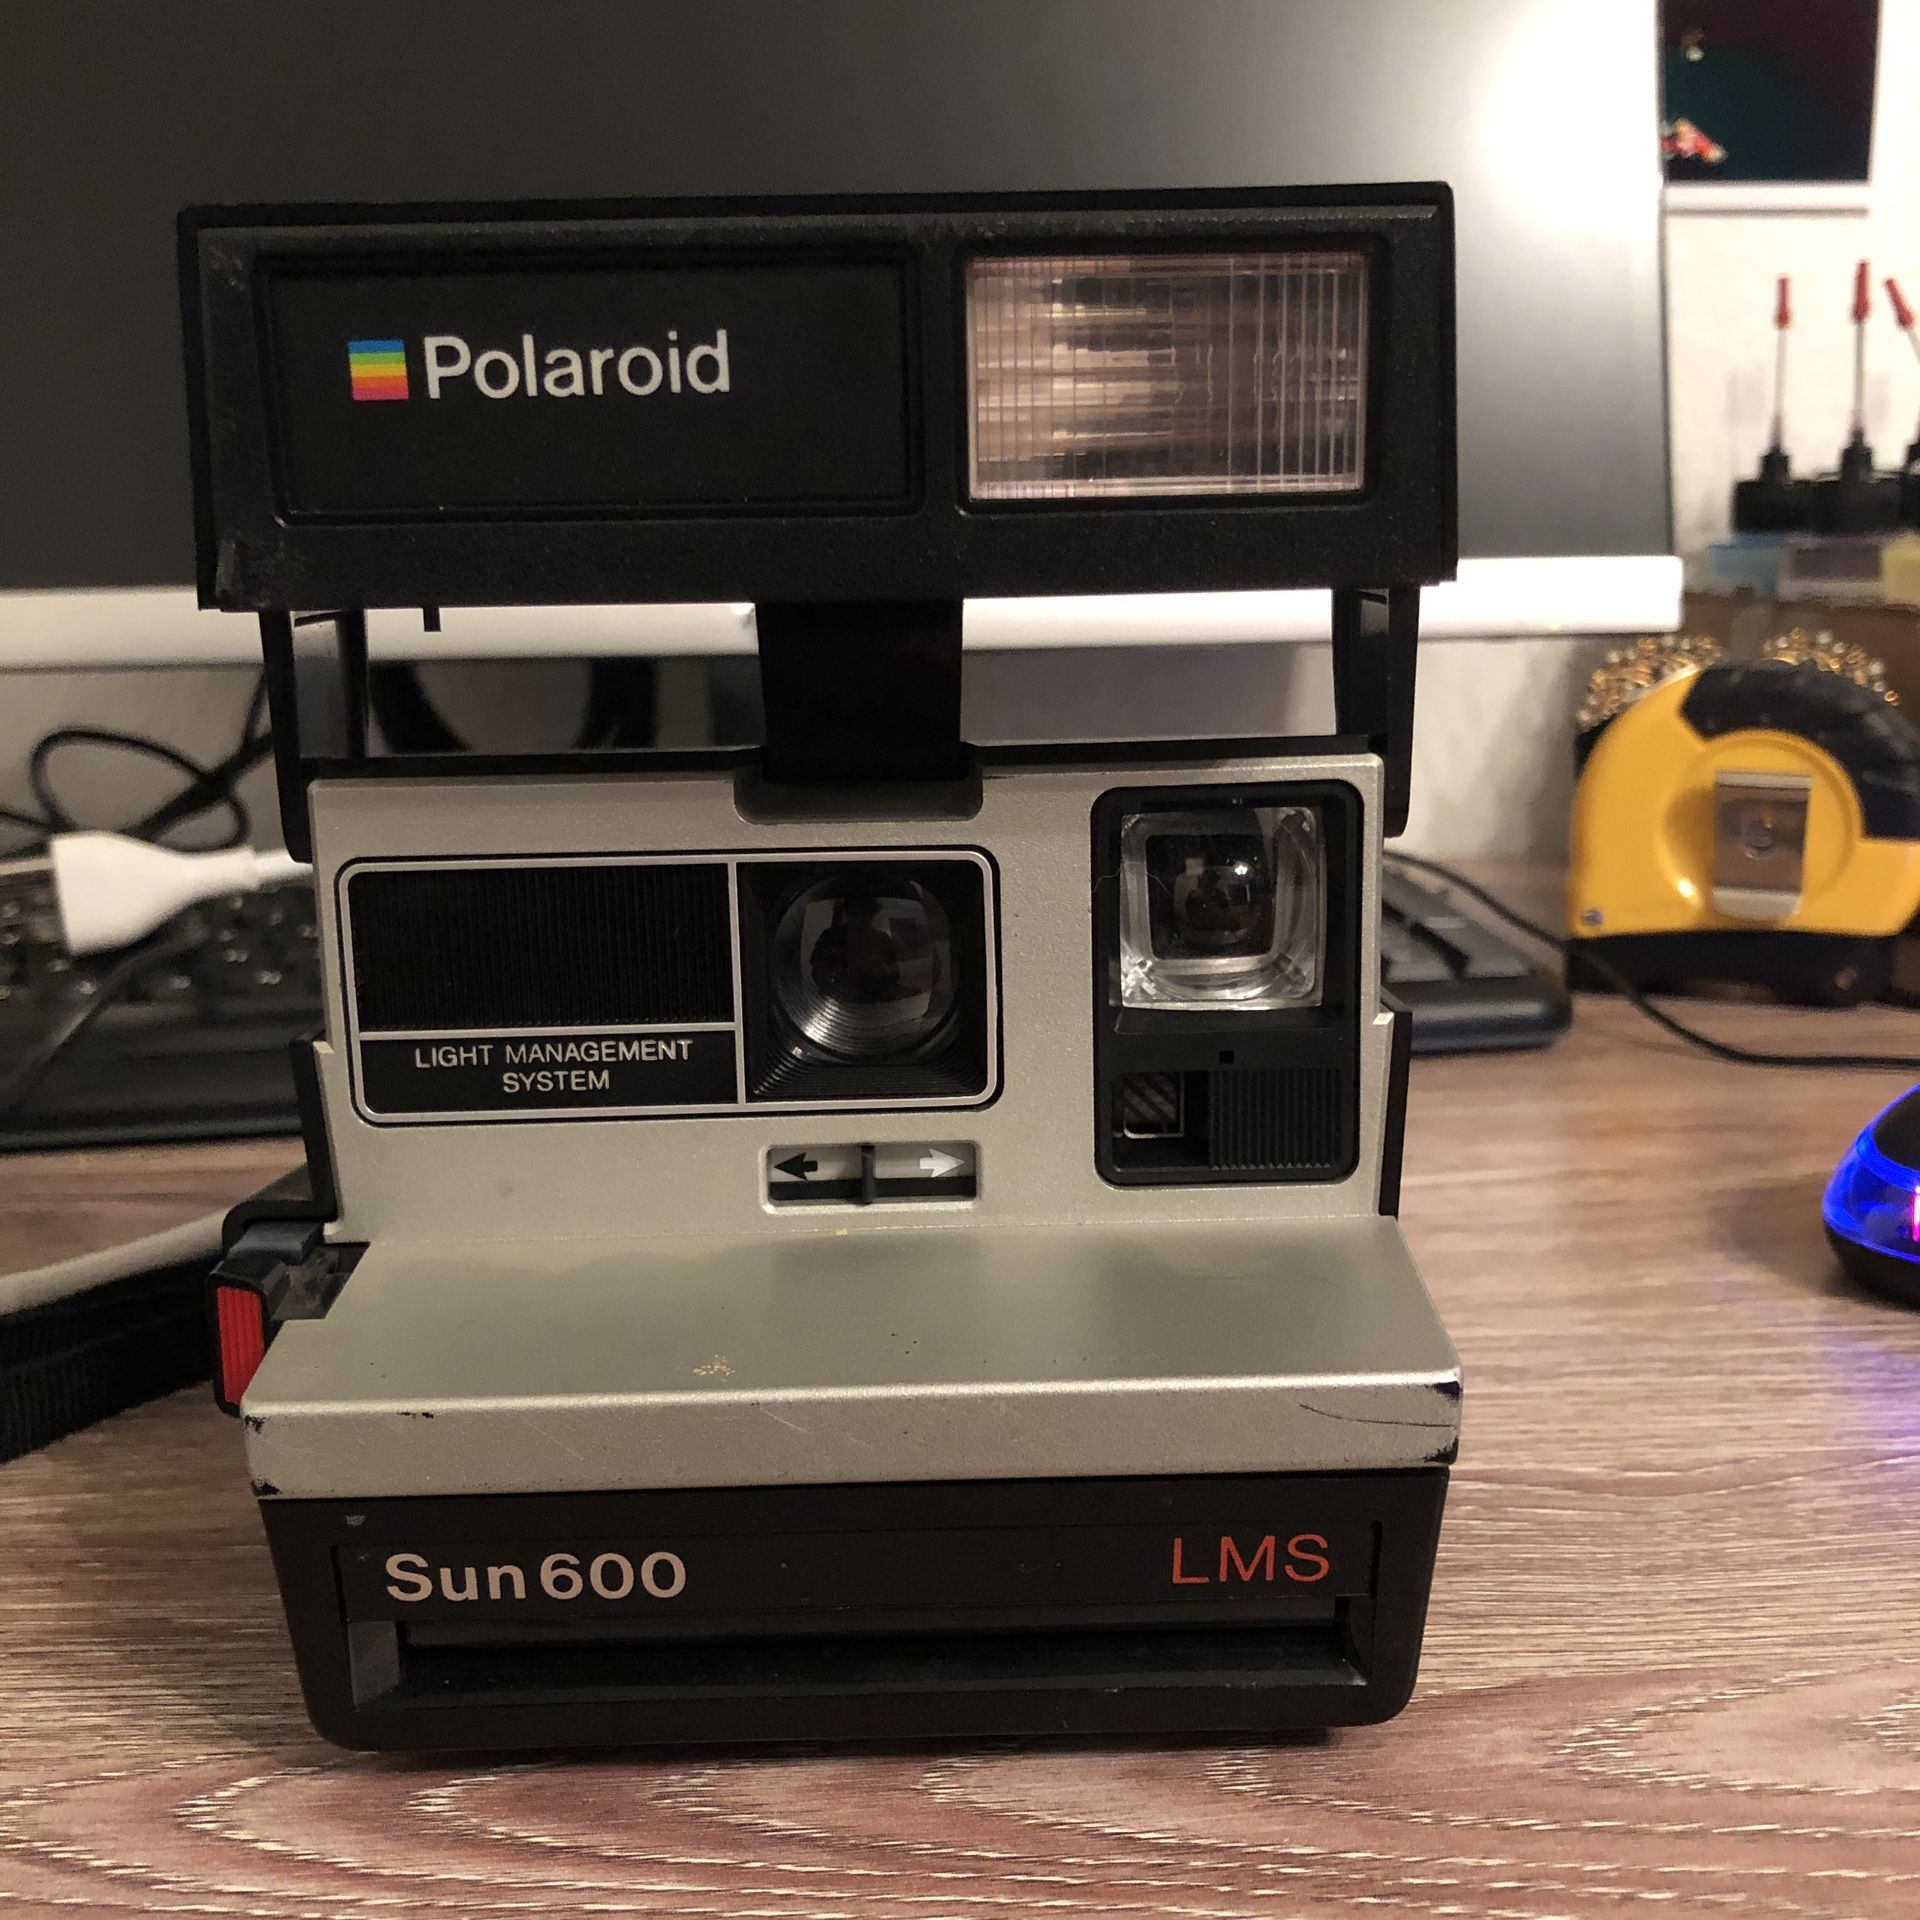 Polaroid sun 600 lms film camera